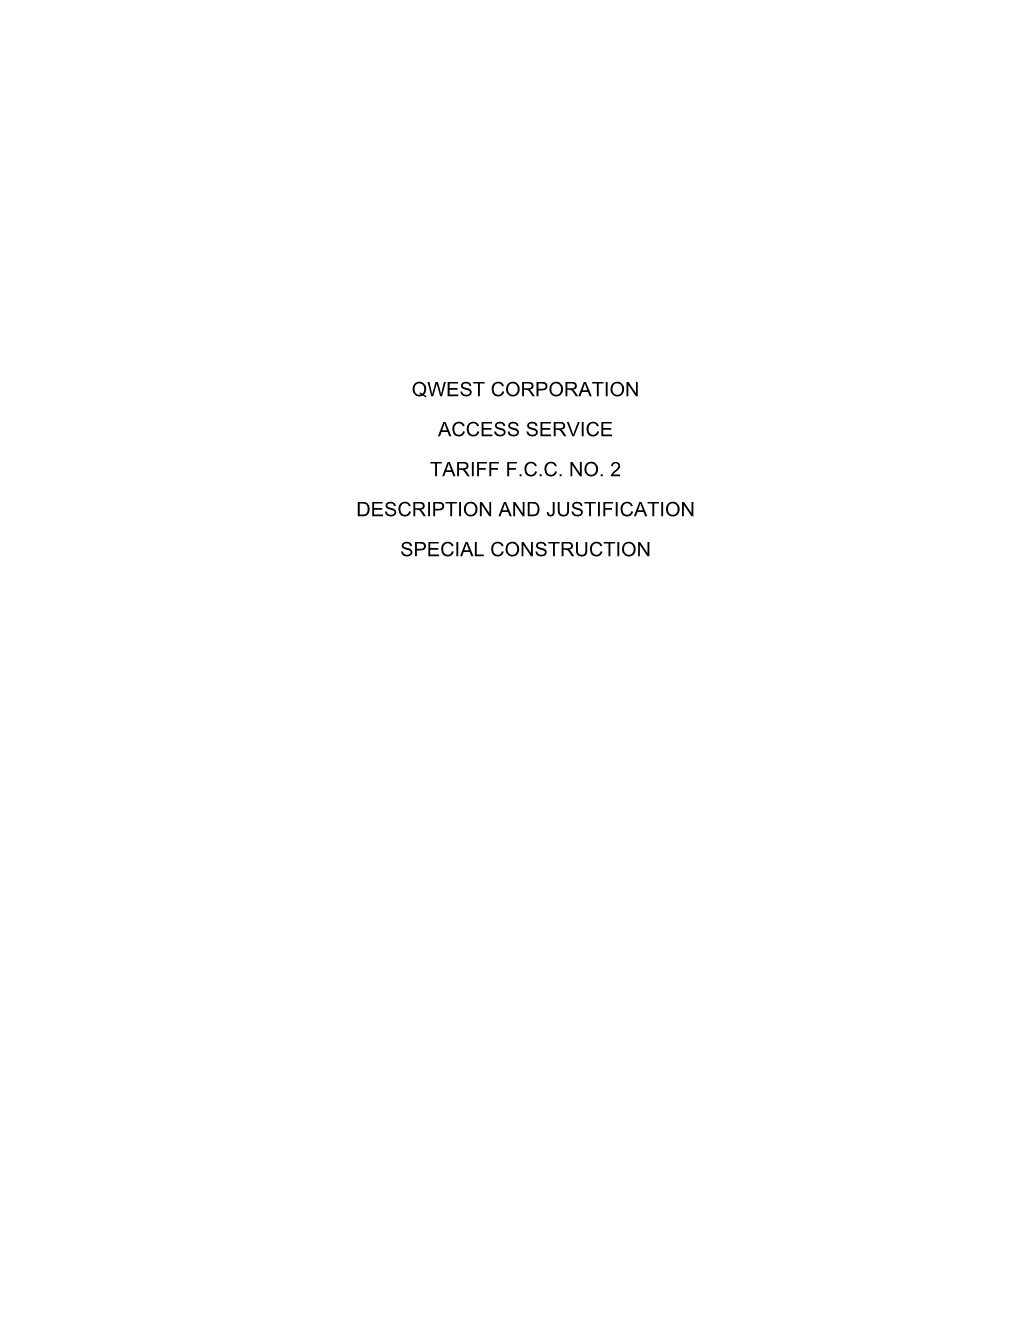 Qwest Corporation Access Service Tariff F.C.C. No. 2 Description and Justification Special Construction